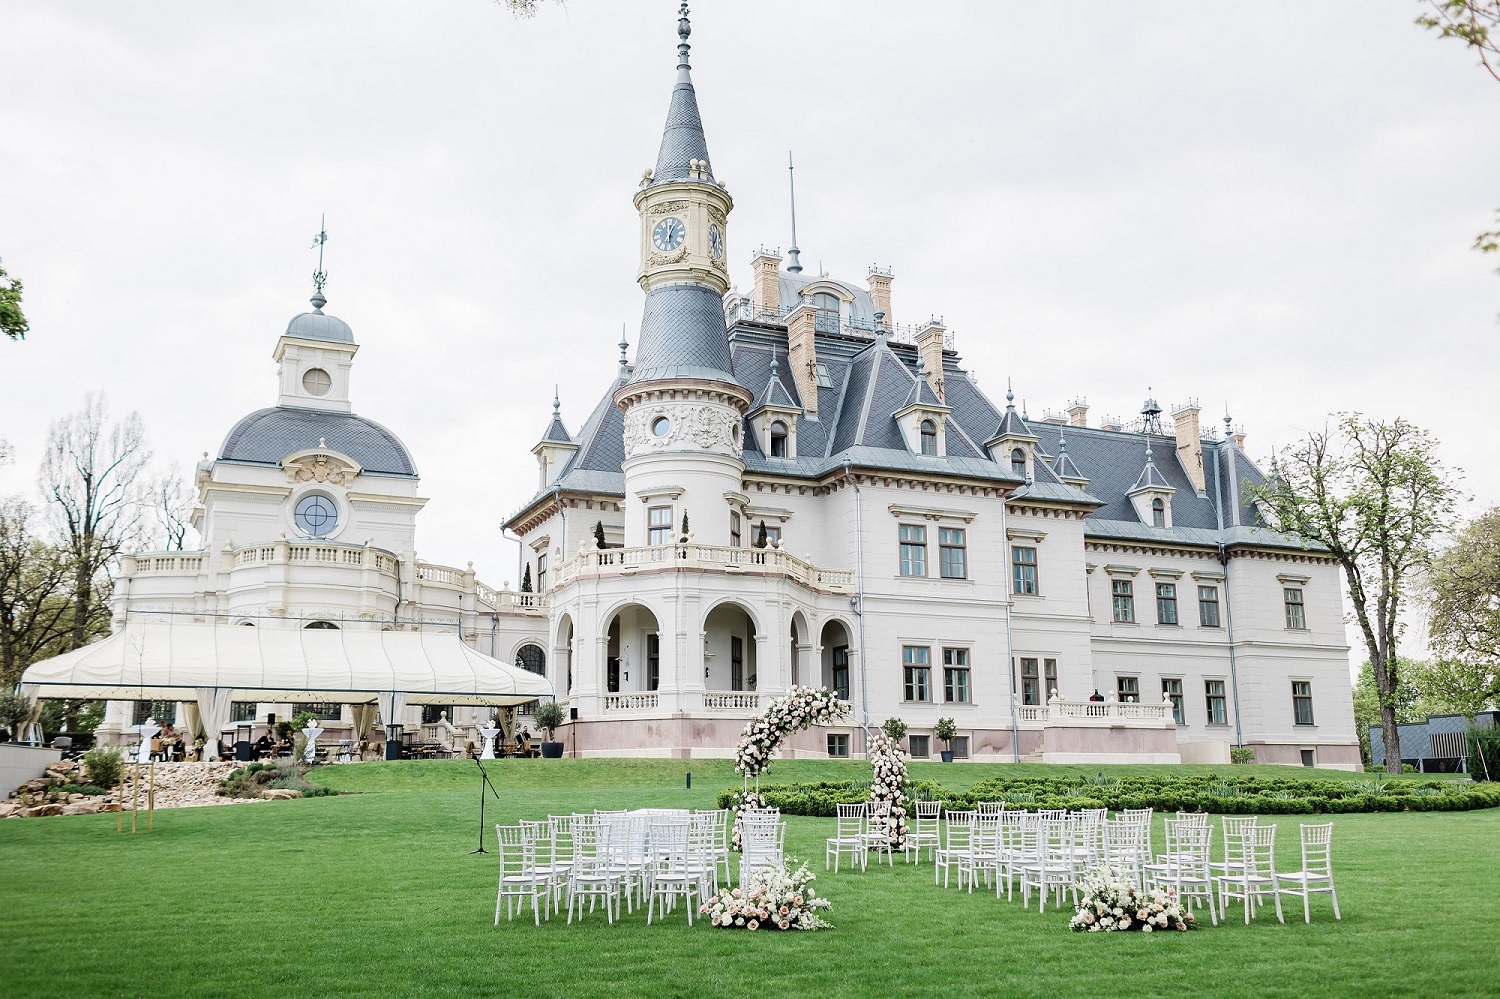 KI Destination wedding in Tura Castle, photo: Rabloczky Andras